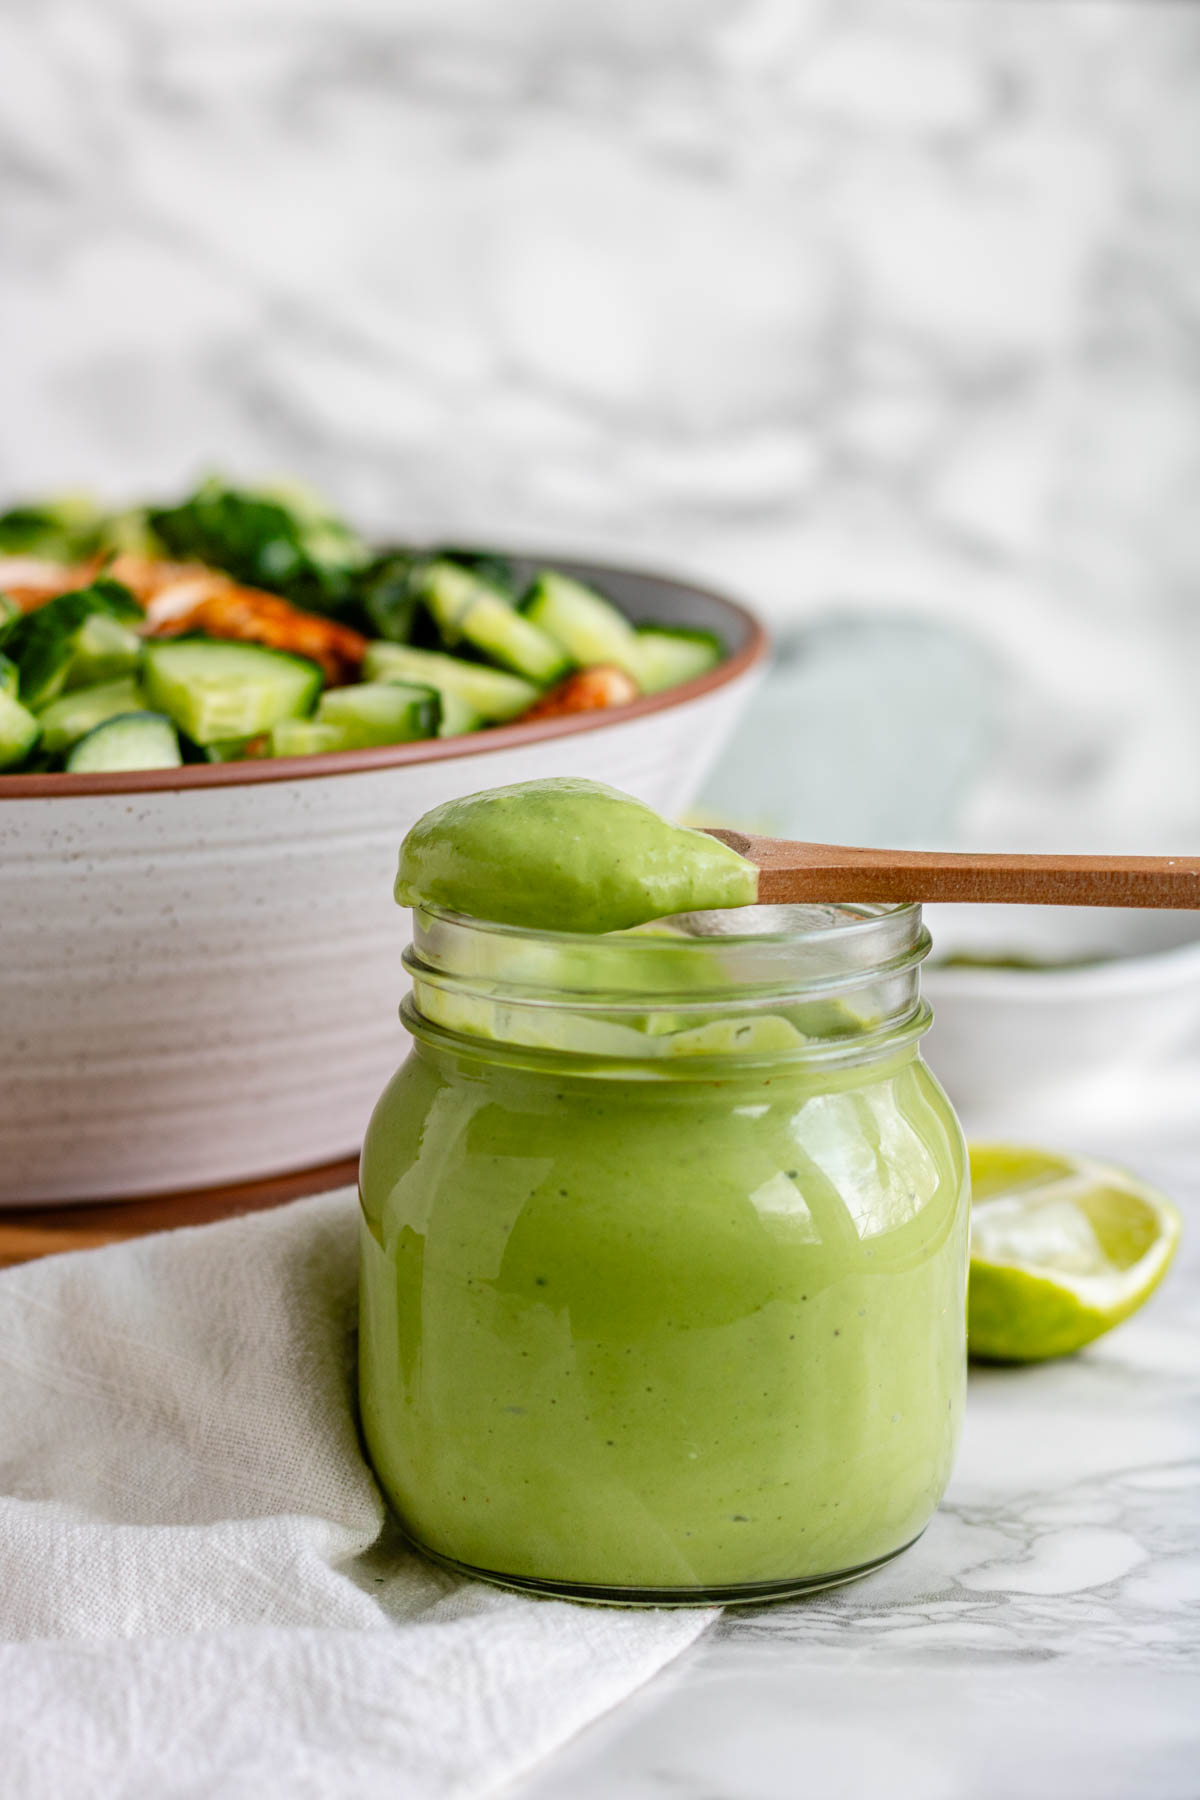 Green salad dressing in a jar.